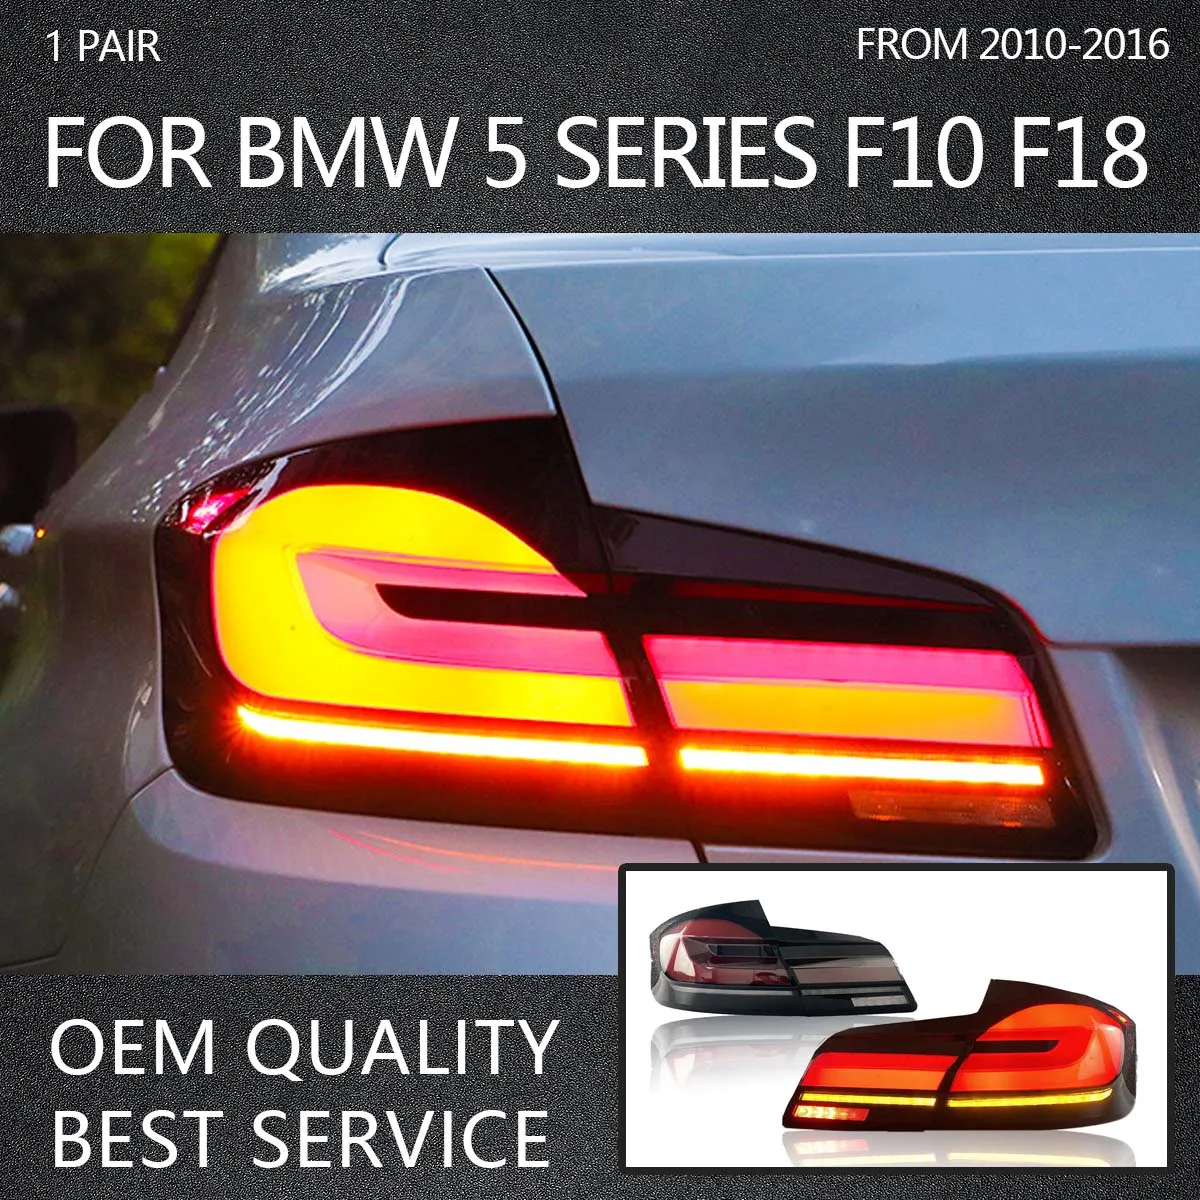 

Car Lights for BMW F10 LED Tail Light 2010-2016 F18 Rear Lamp 520i 525i 528i 530i 535i 540I DRL Brake Reverse Automotive